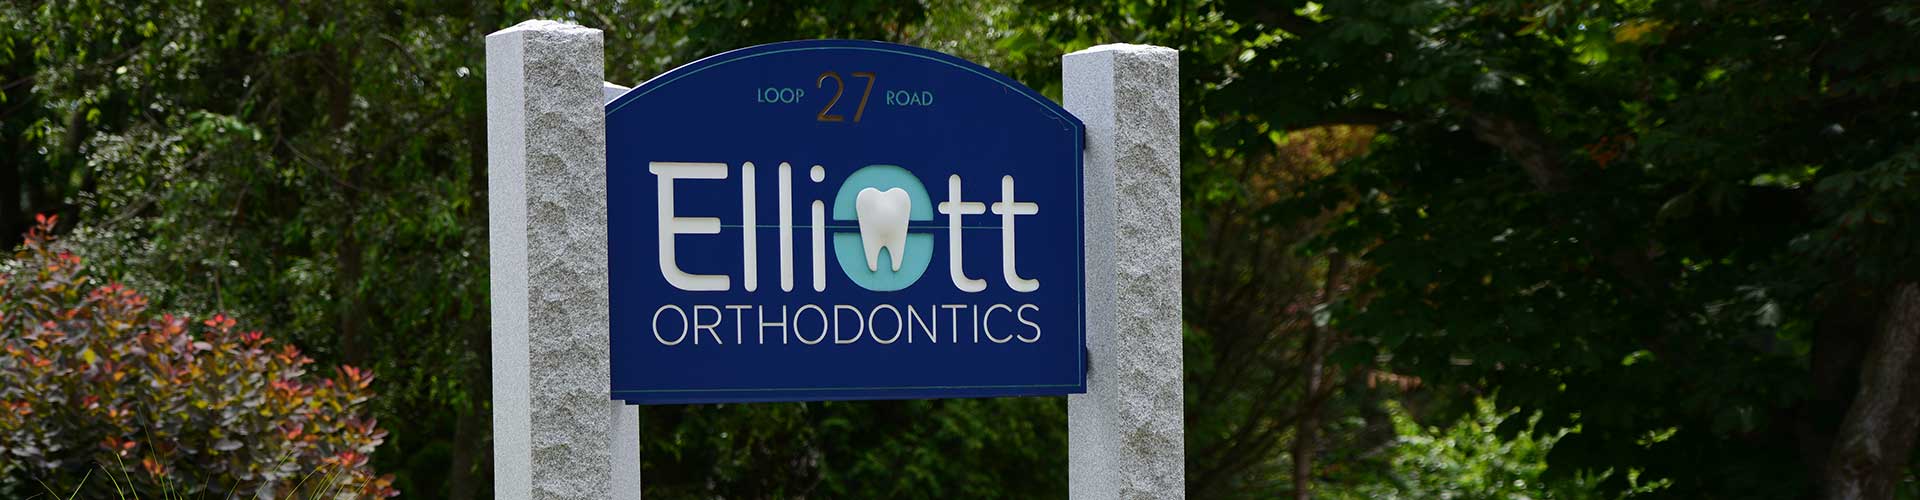 Contacts Us Elliott Orthodontics Merrimack New Boston NH